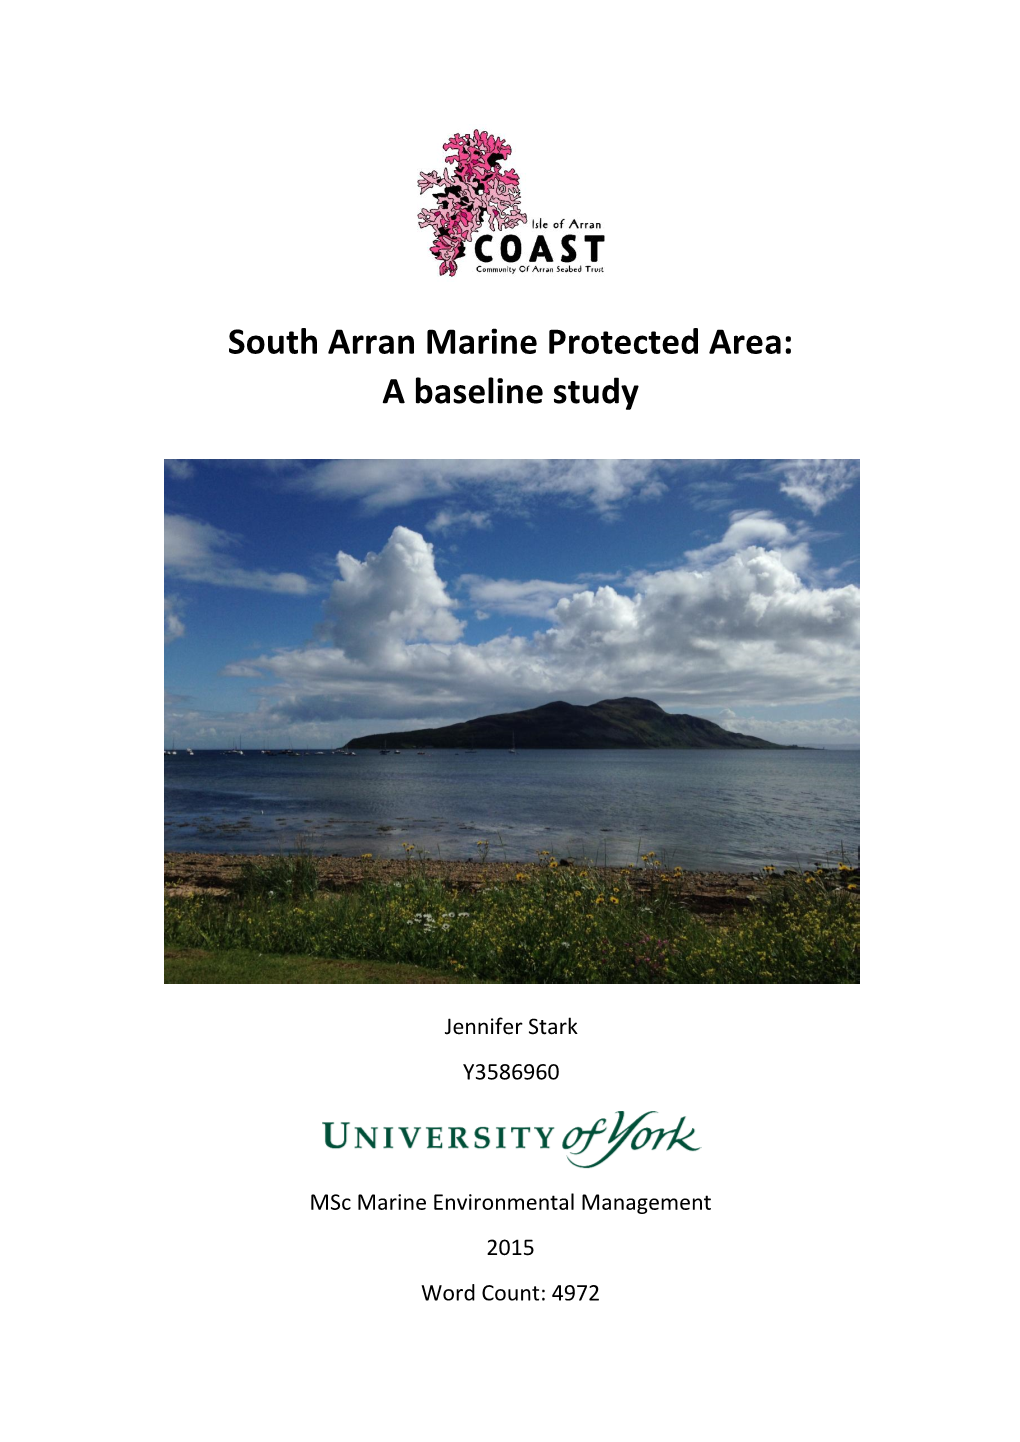 South Arran Marine Protected Area: a Baseline Study